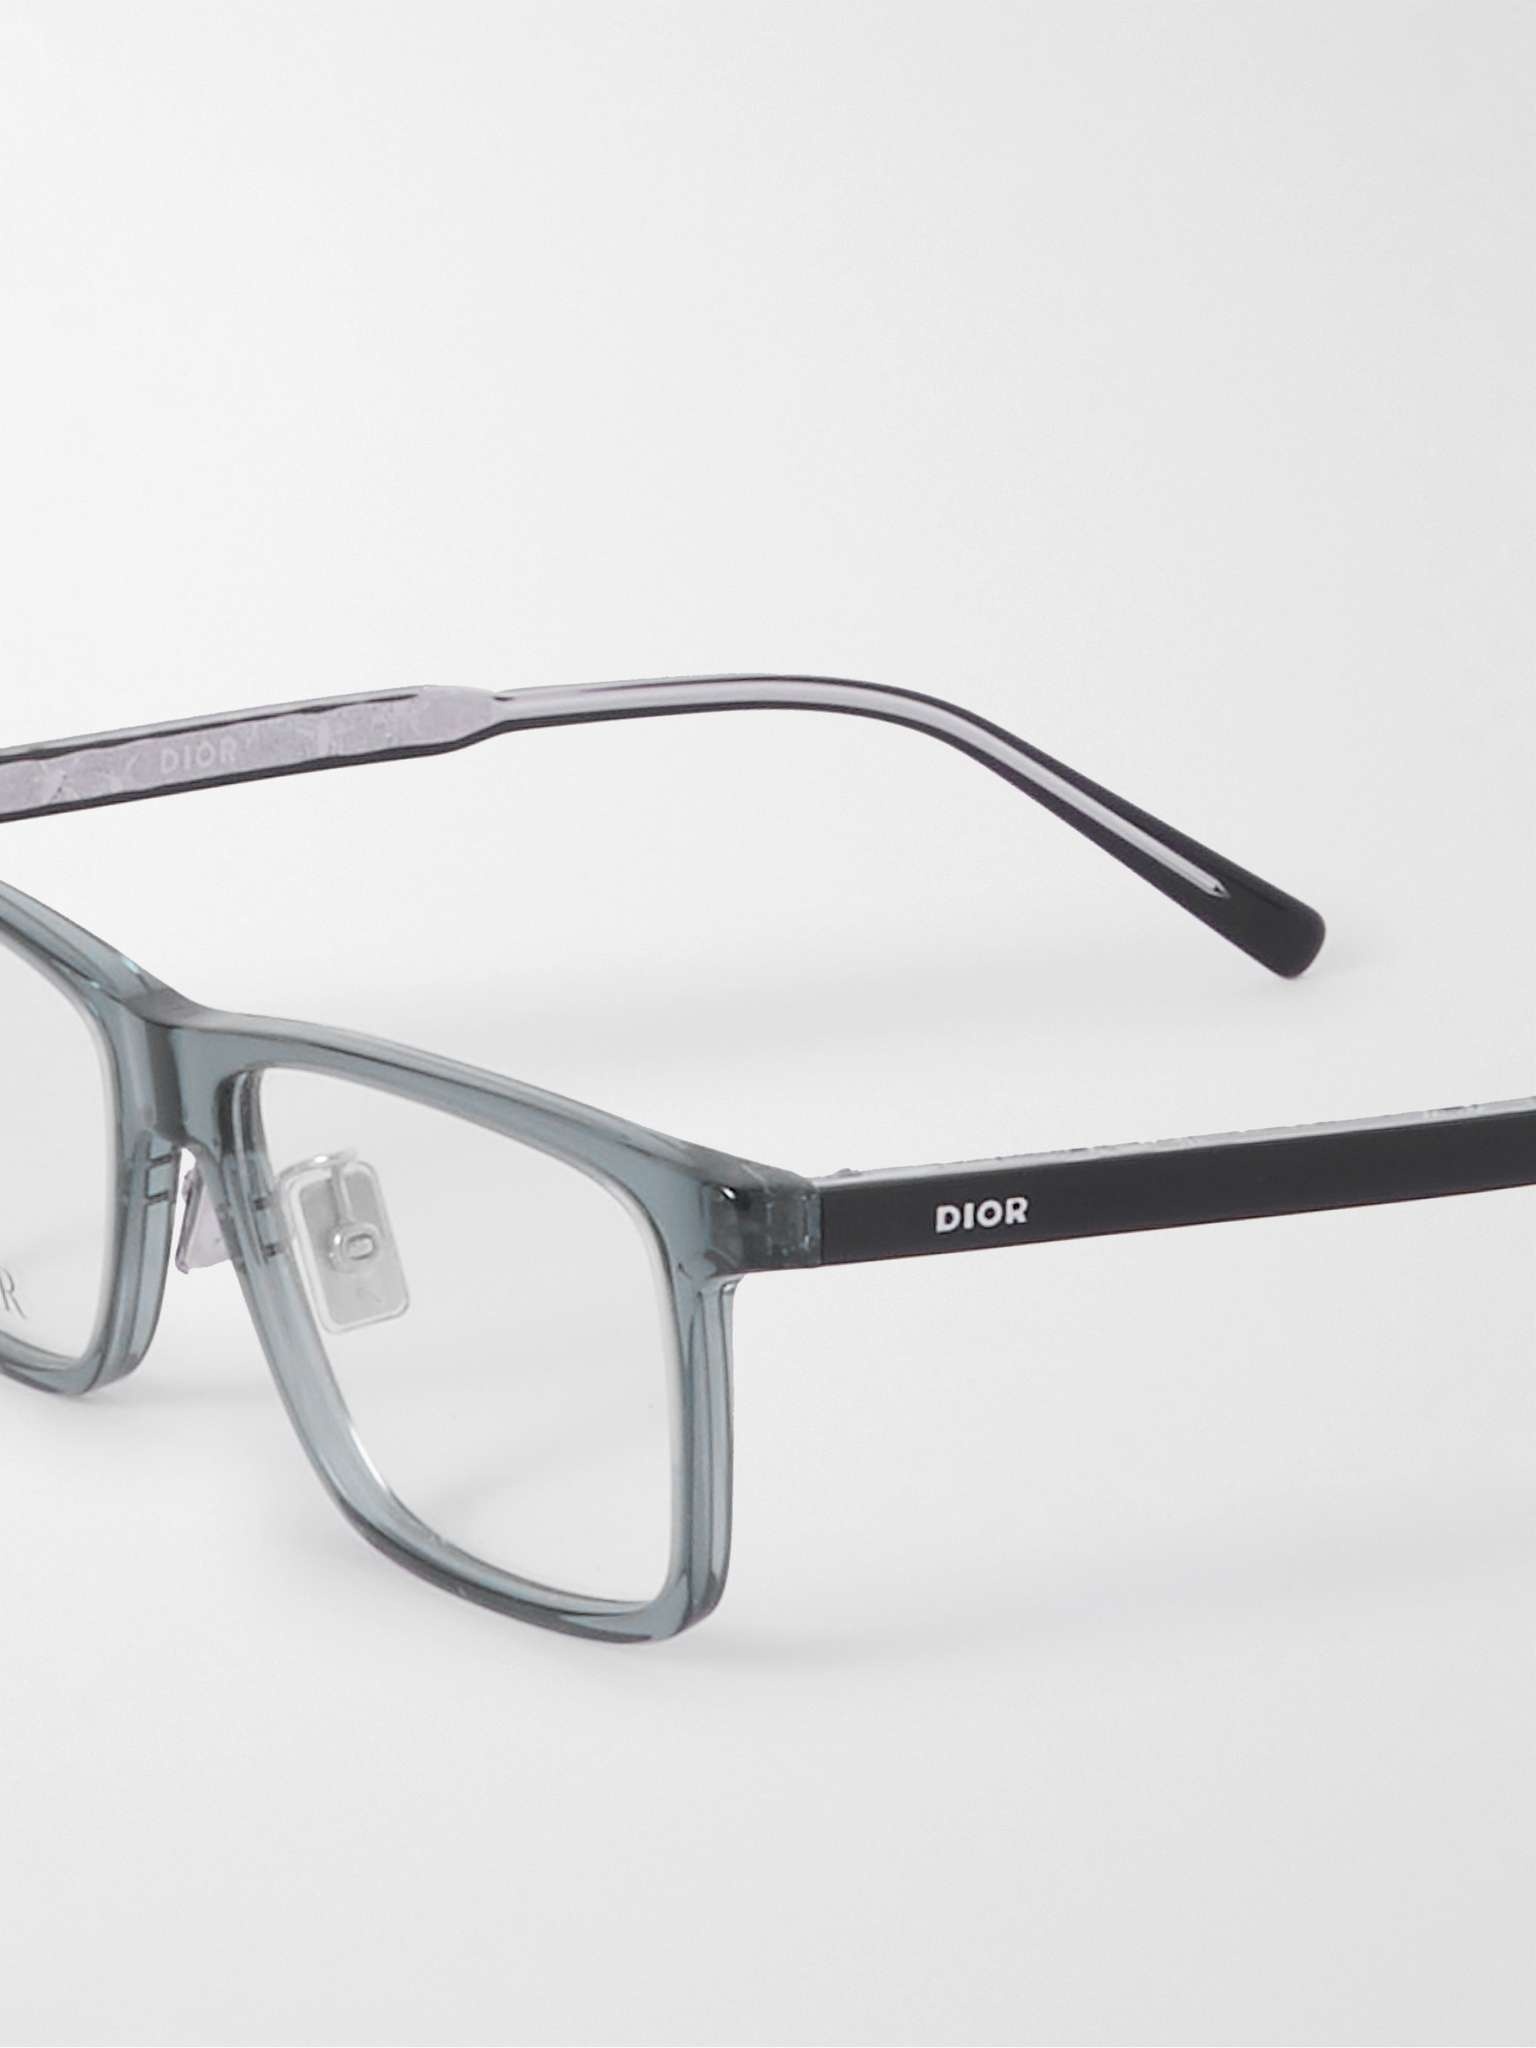 InDiorO S4F Square-Frame Acetate Optical Glasses - 4